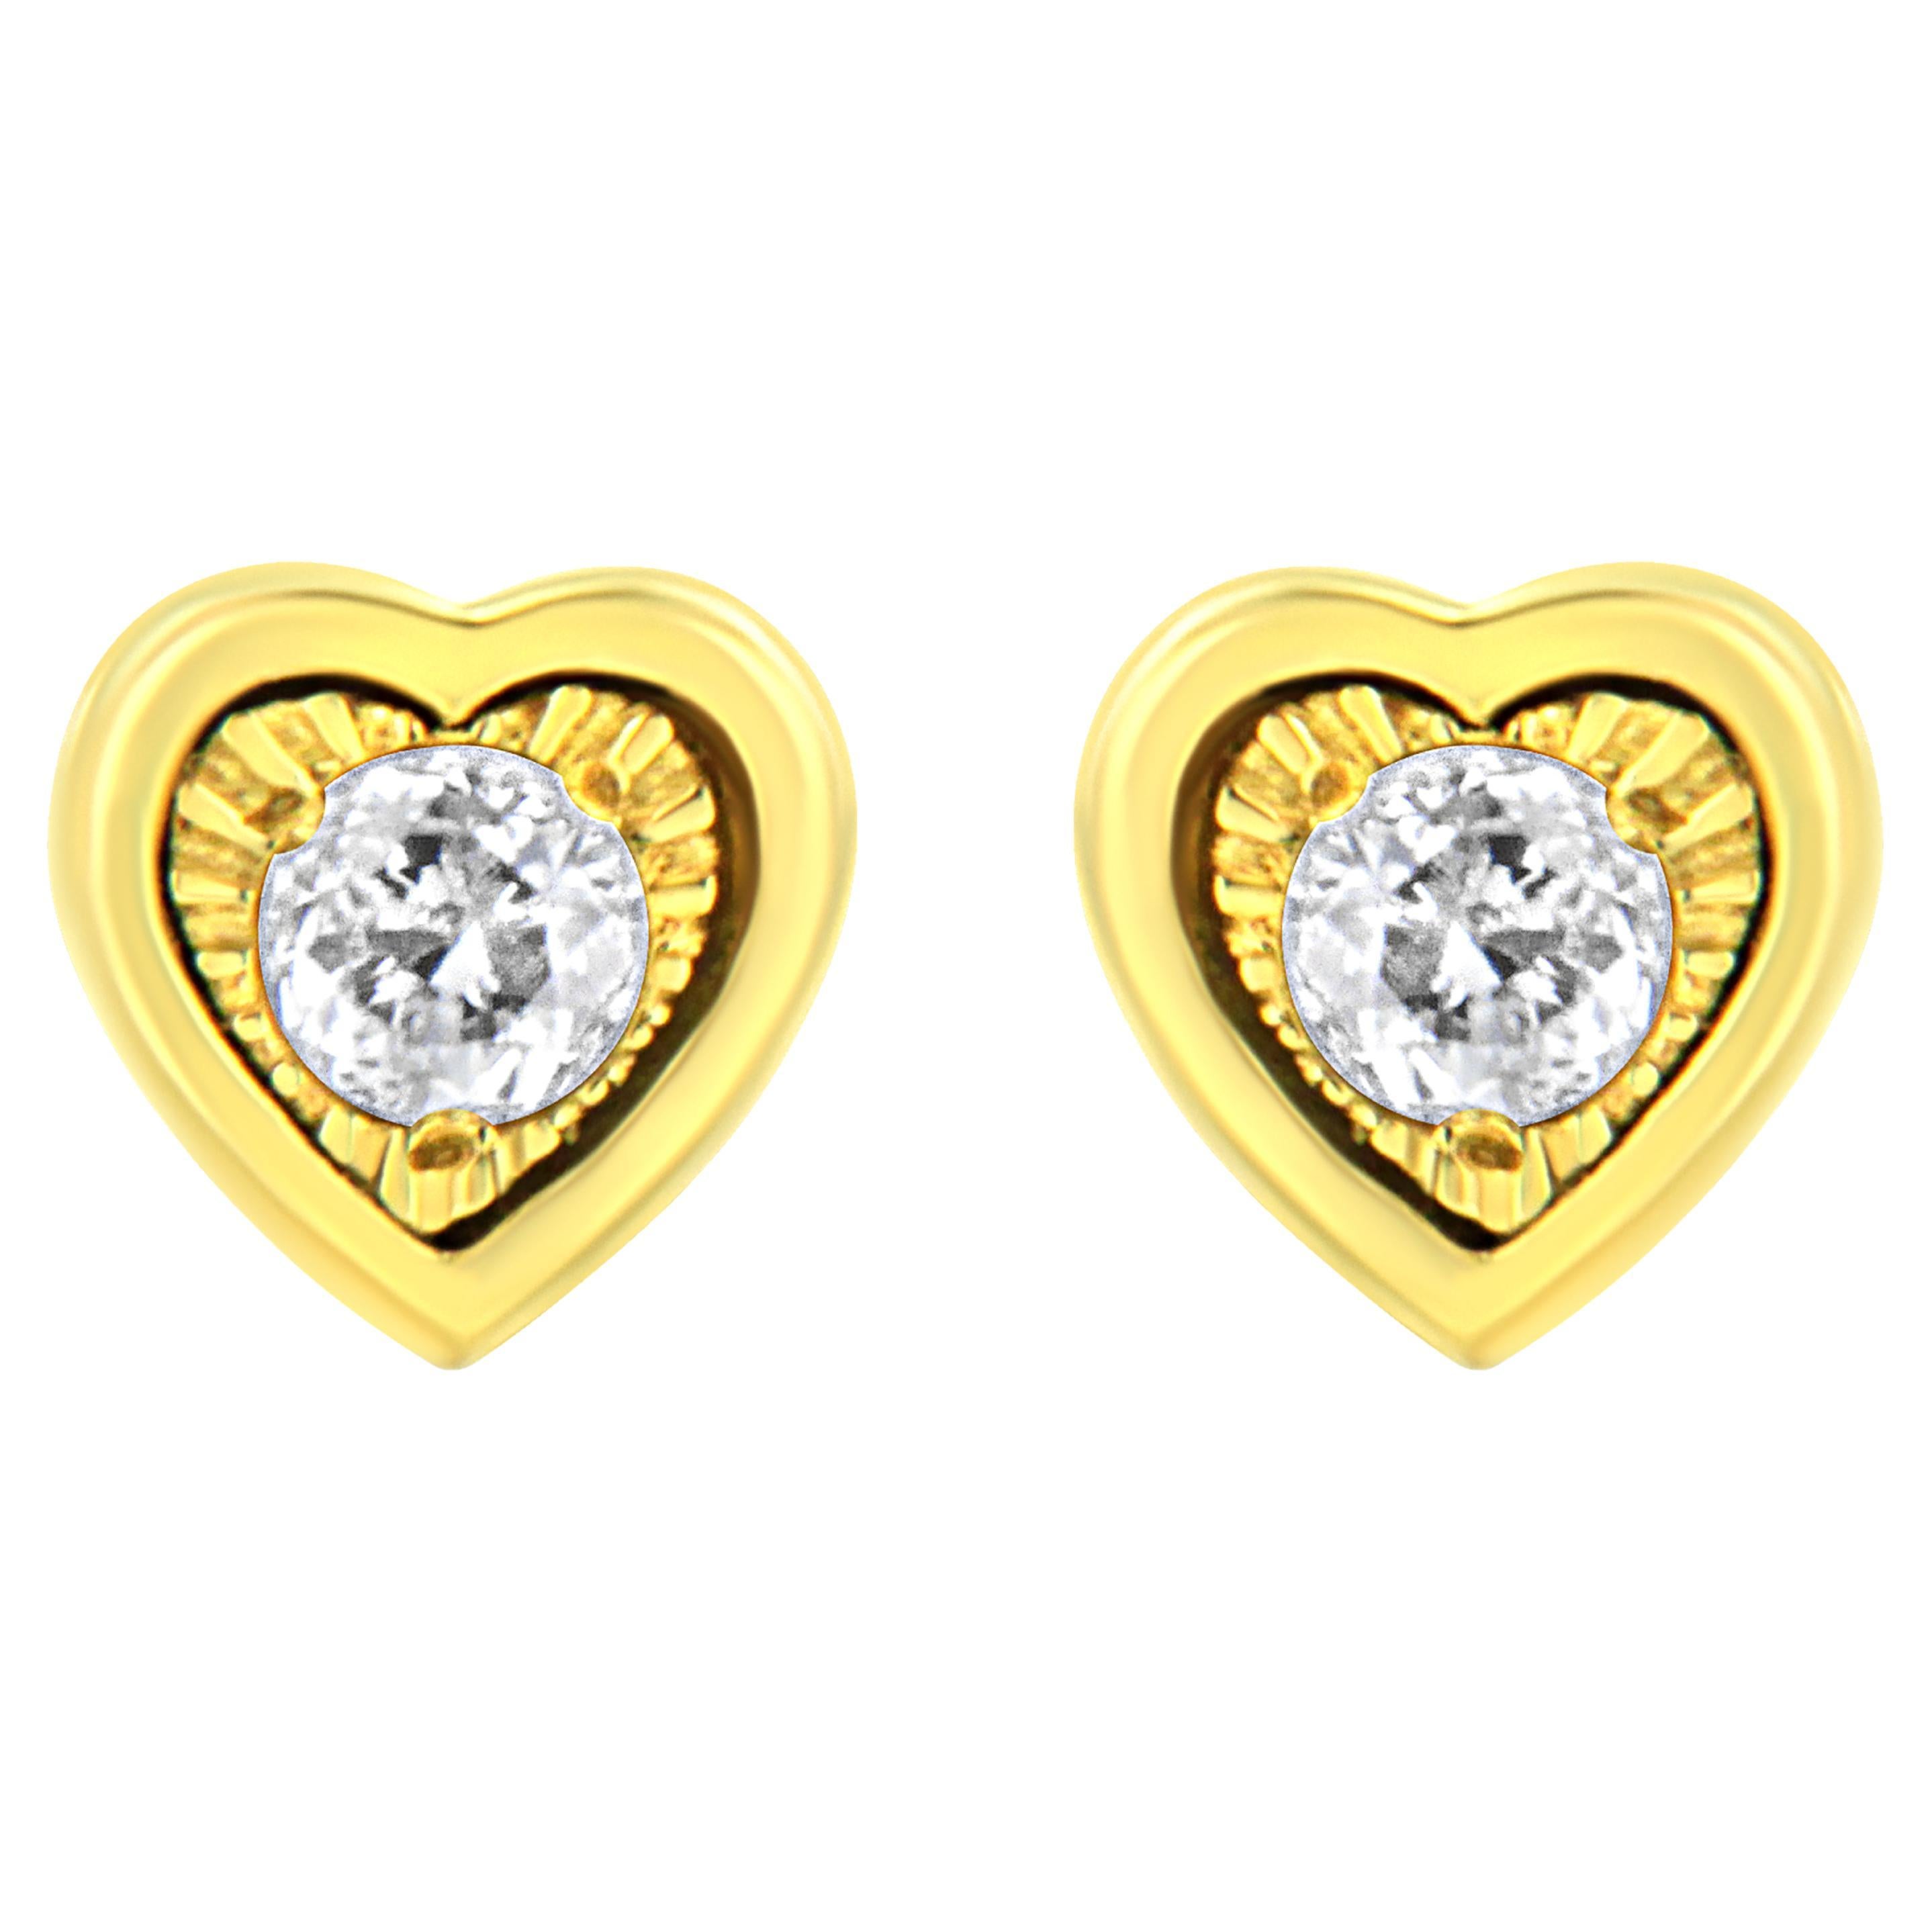 Yellow Gold Plated Sterling Silver 1/10 Carat Diamond Heart Shape Stud Earrings